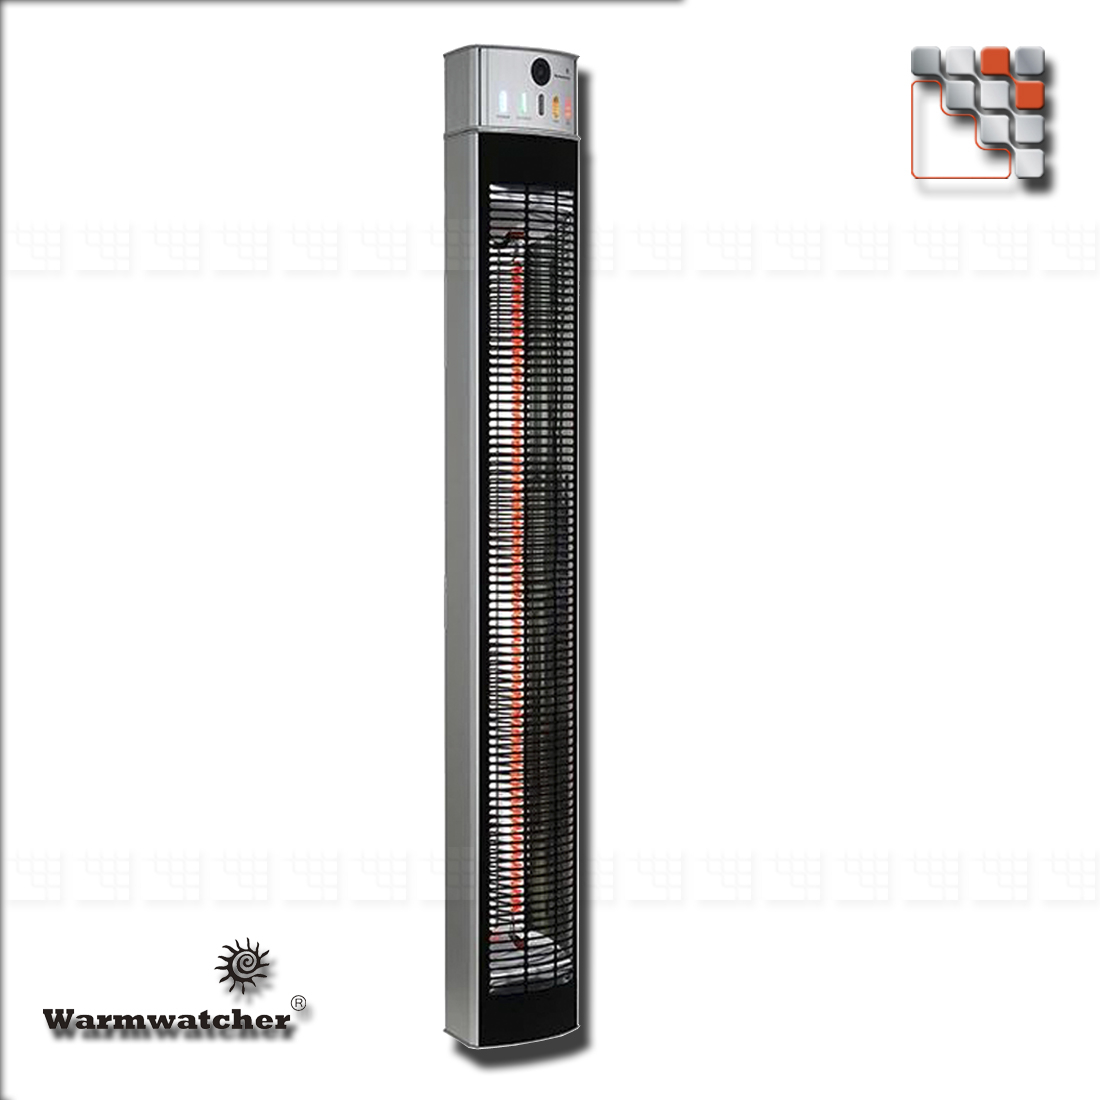 Vermount Warmwatcher vertical indoor outdoor infrared heater